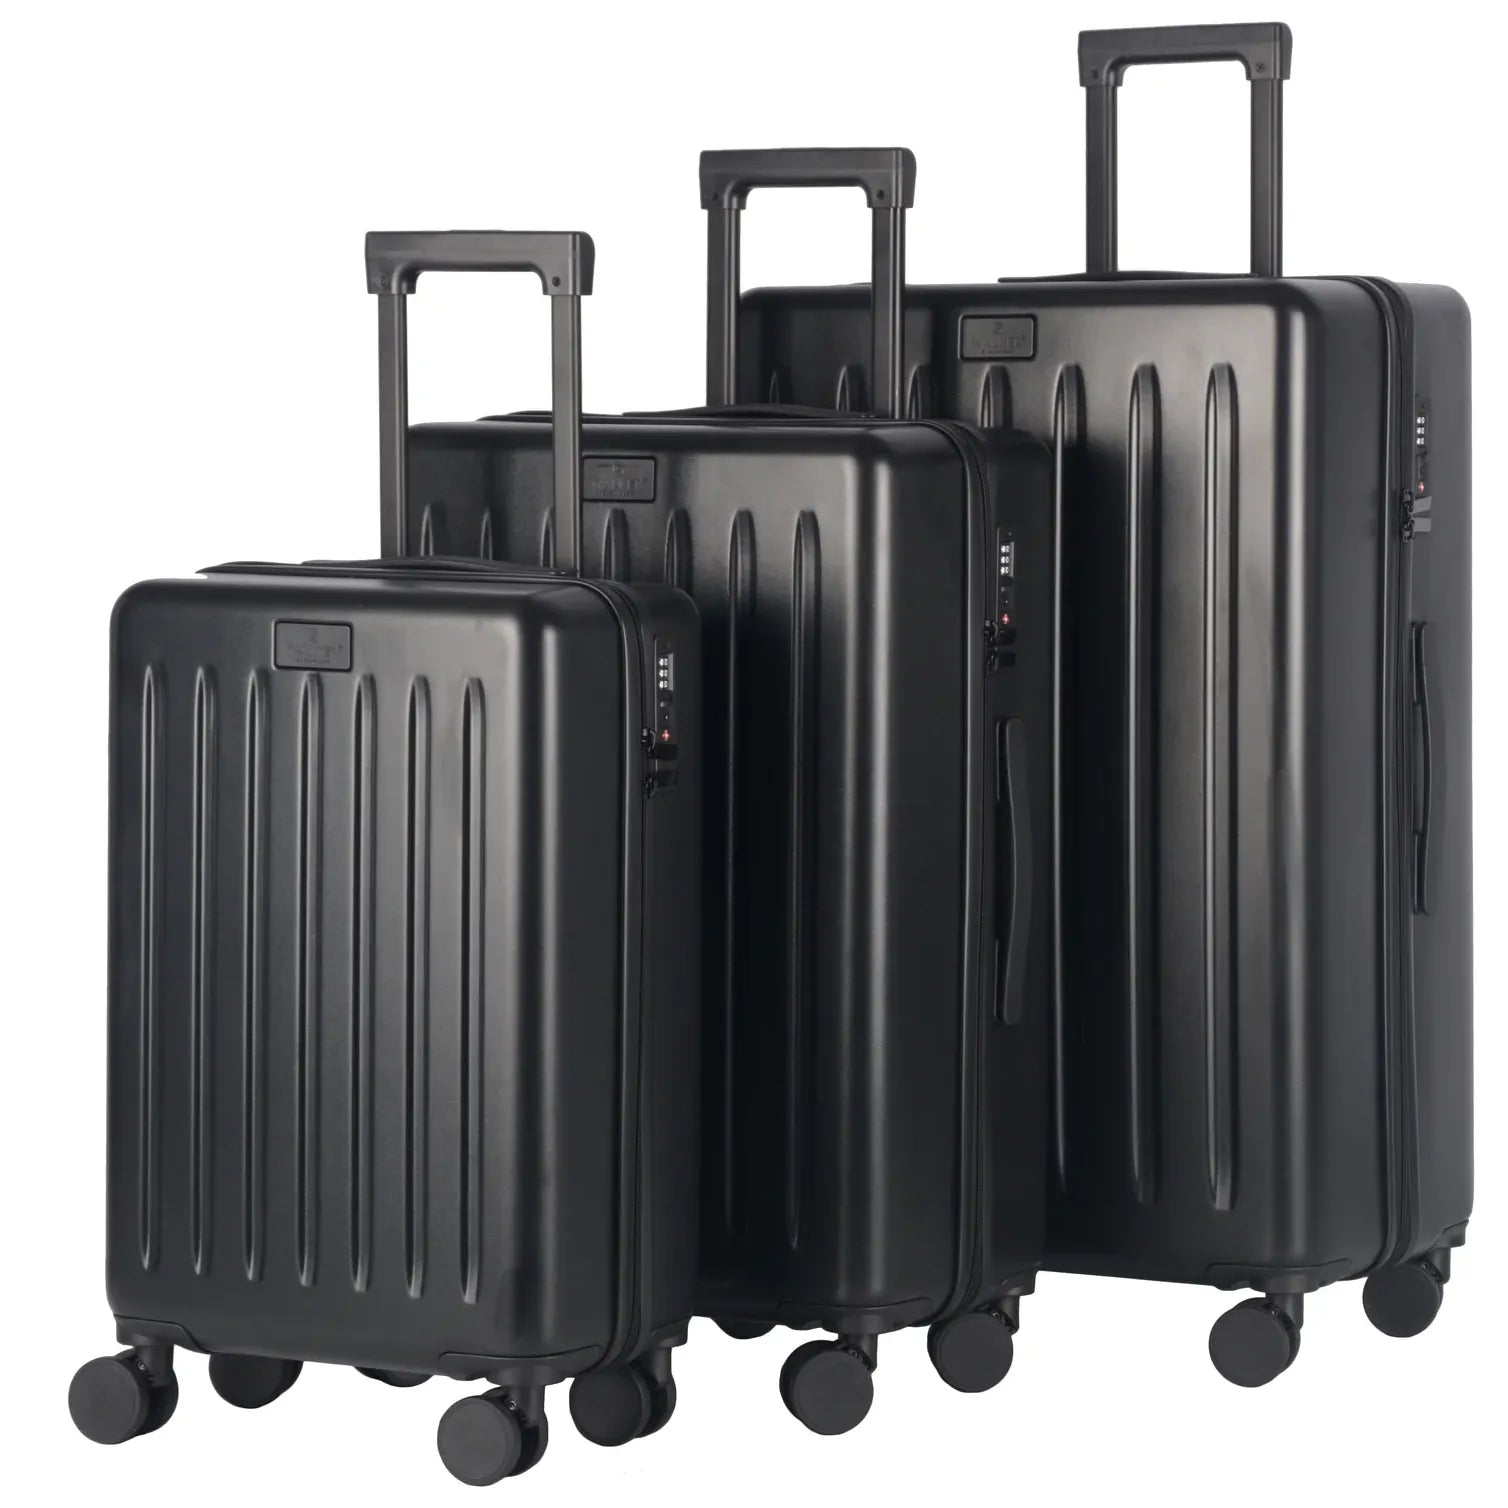 Walker Florida 3-piece suitcase set - Anthracite